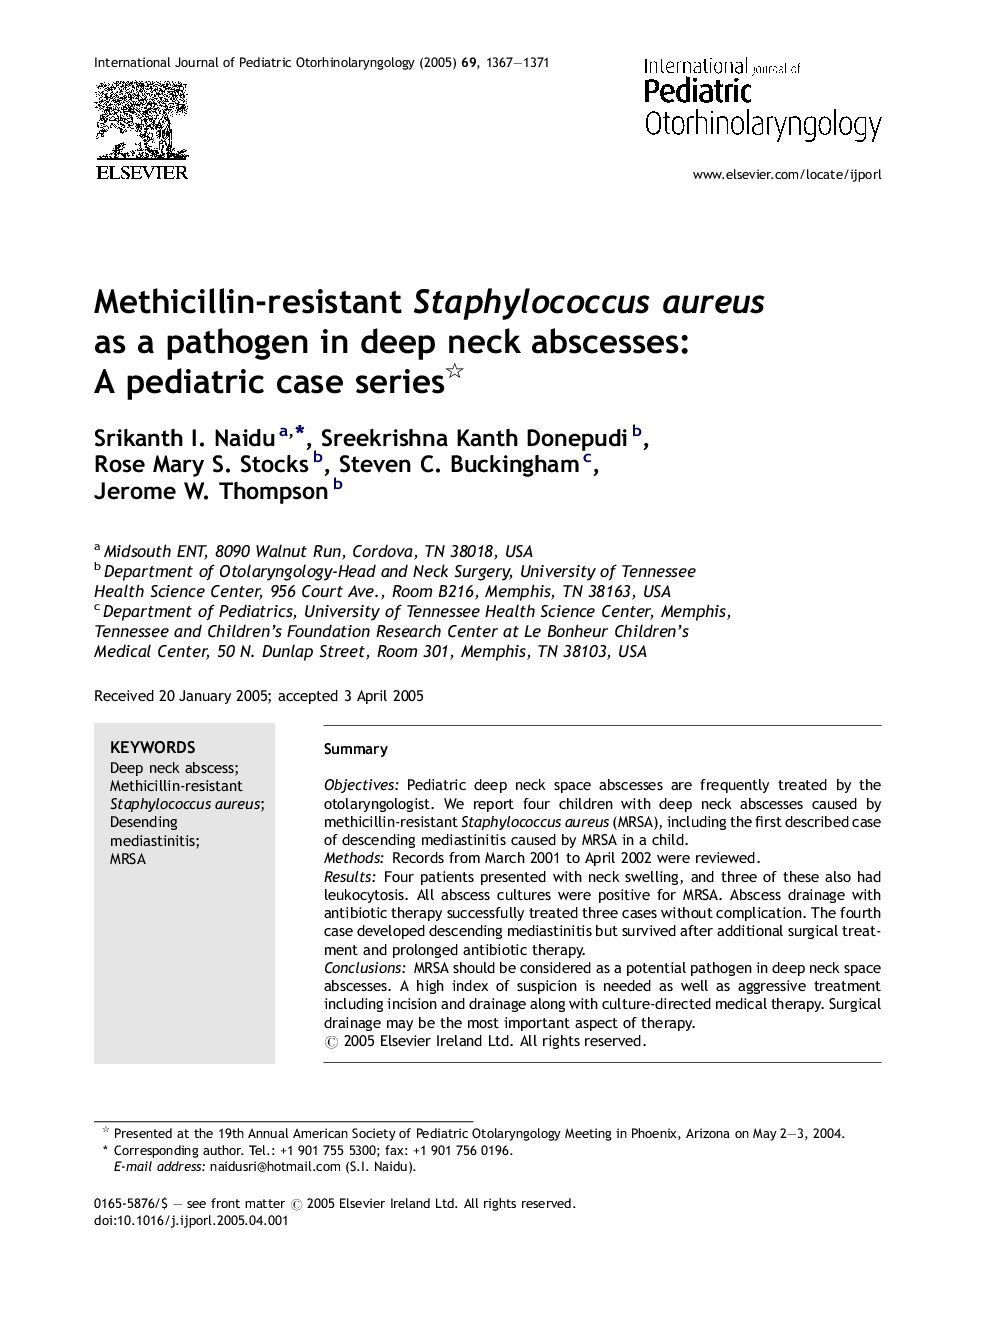 Methicillin-resistant Staphylococcus aureus as a pathogen in deep neck abscesses: A pediatric case series